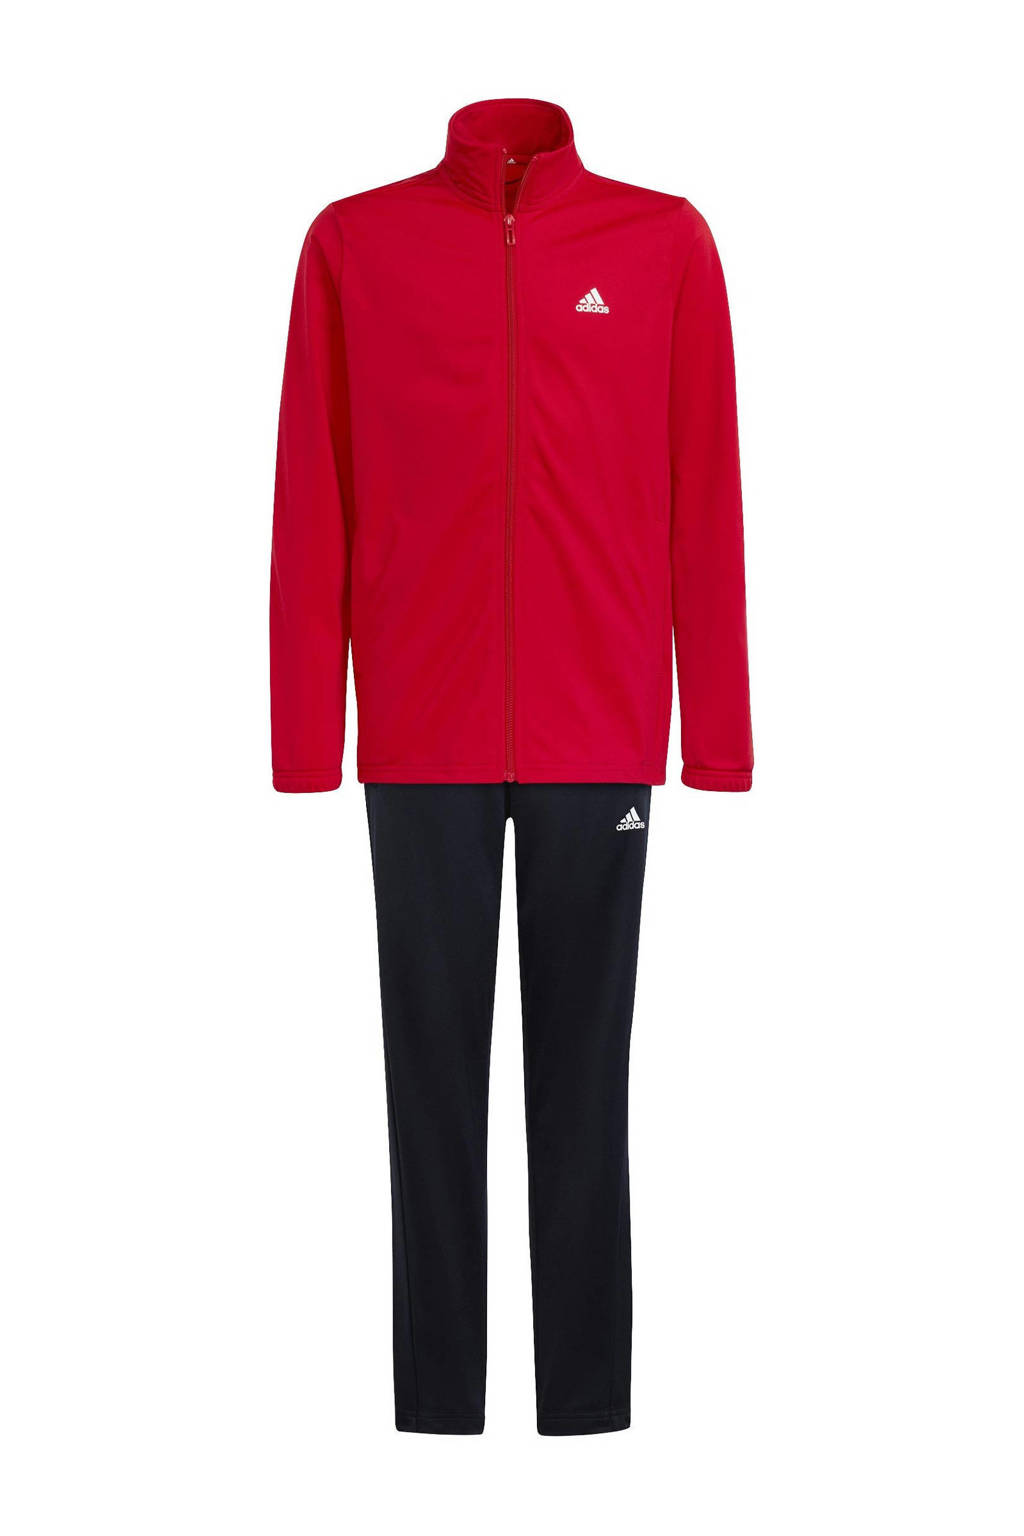 Alabama Kilometers Vergissing adidas Sportswear trainingspak rood/zwart | kleertjes.com